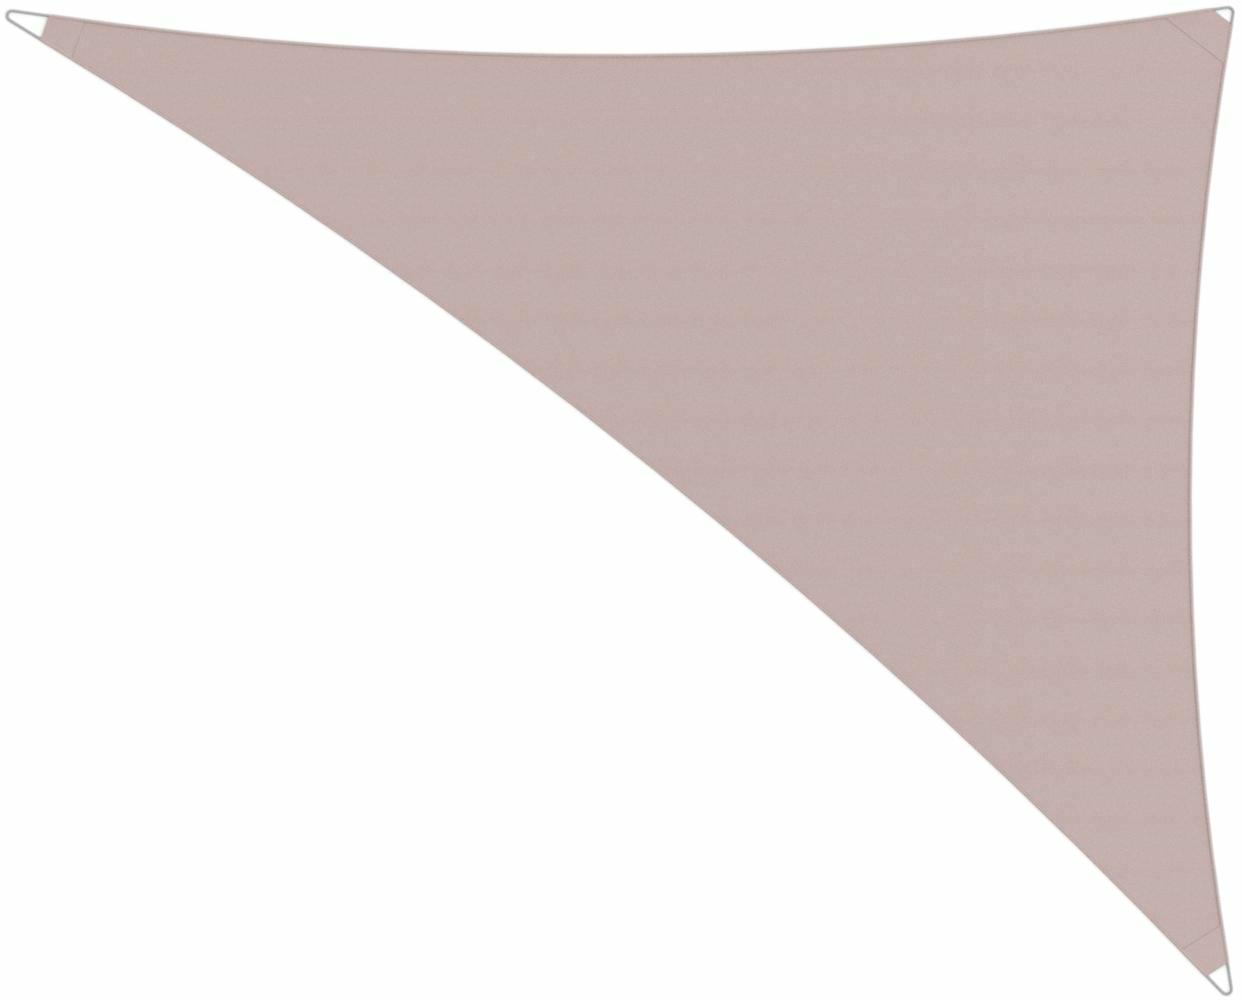 Ingenua shade sail Triangle 4 x 5 x 6,4 m, for outdoor use. Colour of the fabric shade sail Blush.